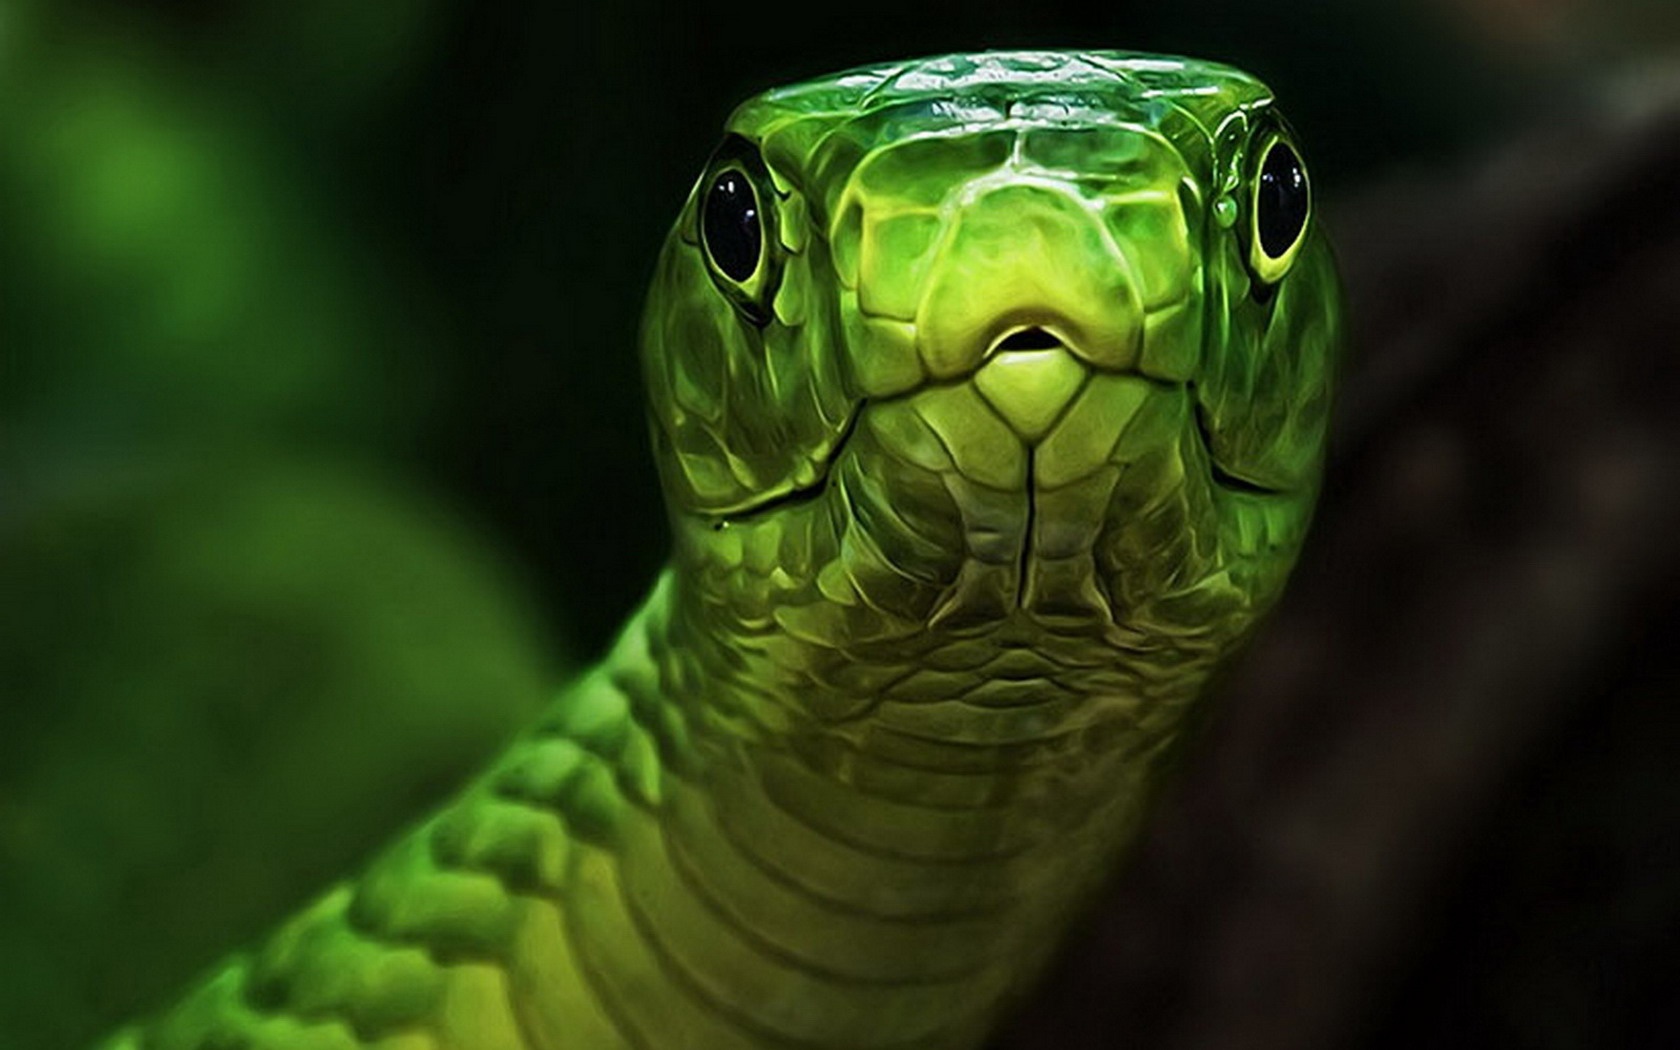 Green snake wallpaper download free Green snake Green snake hd